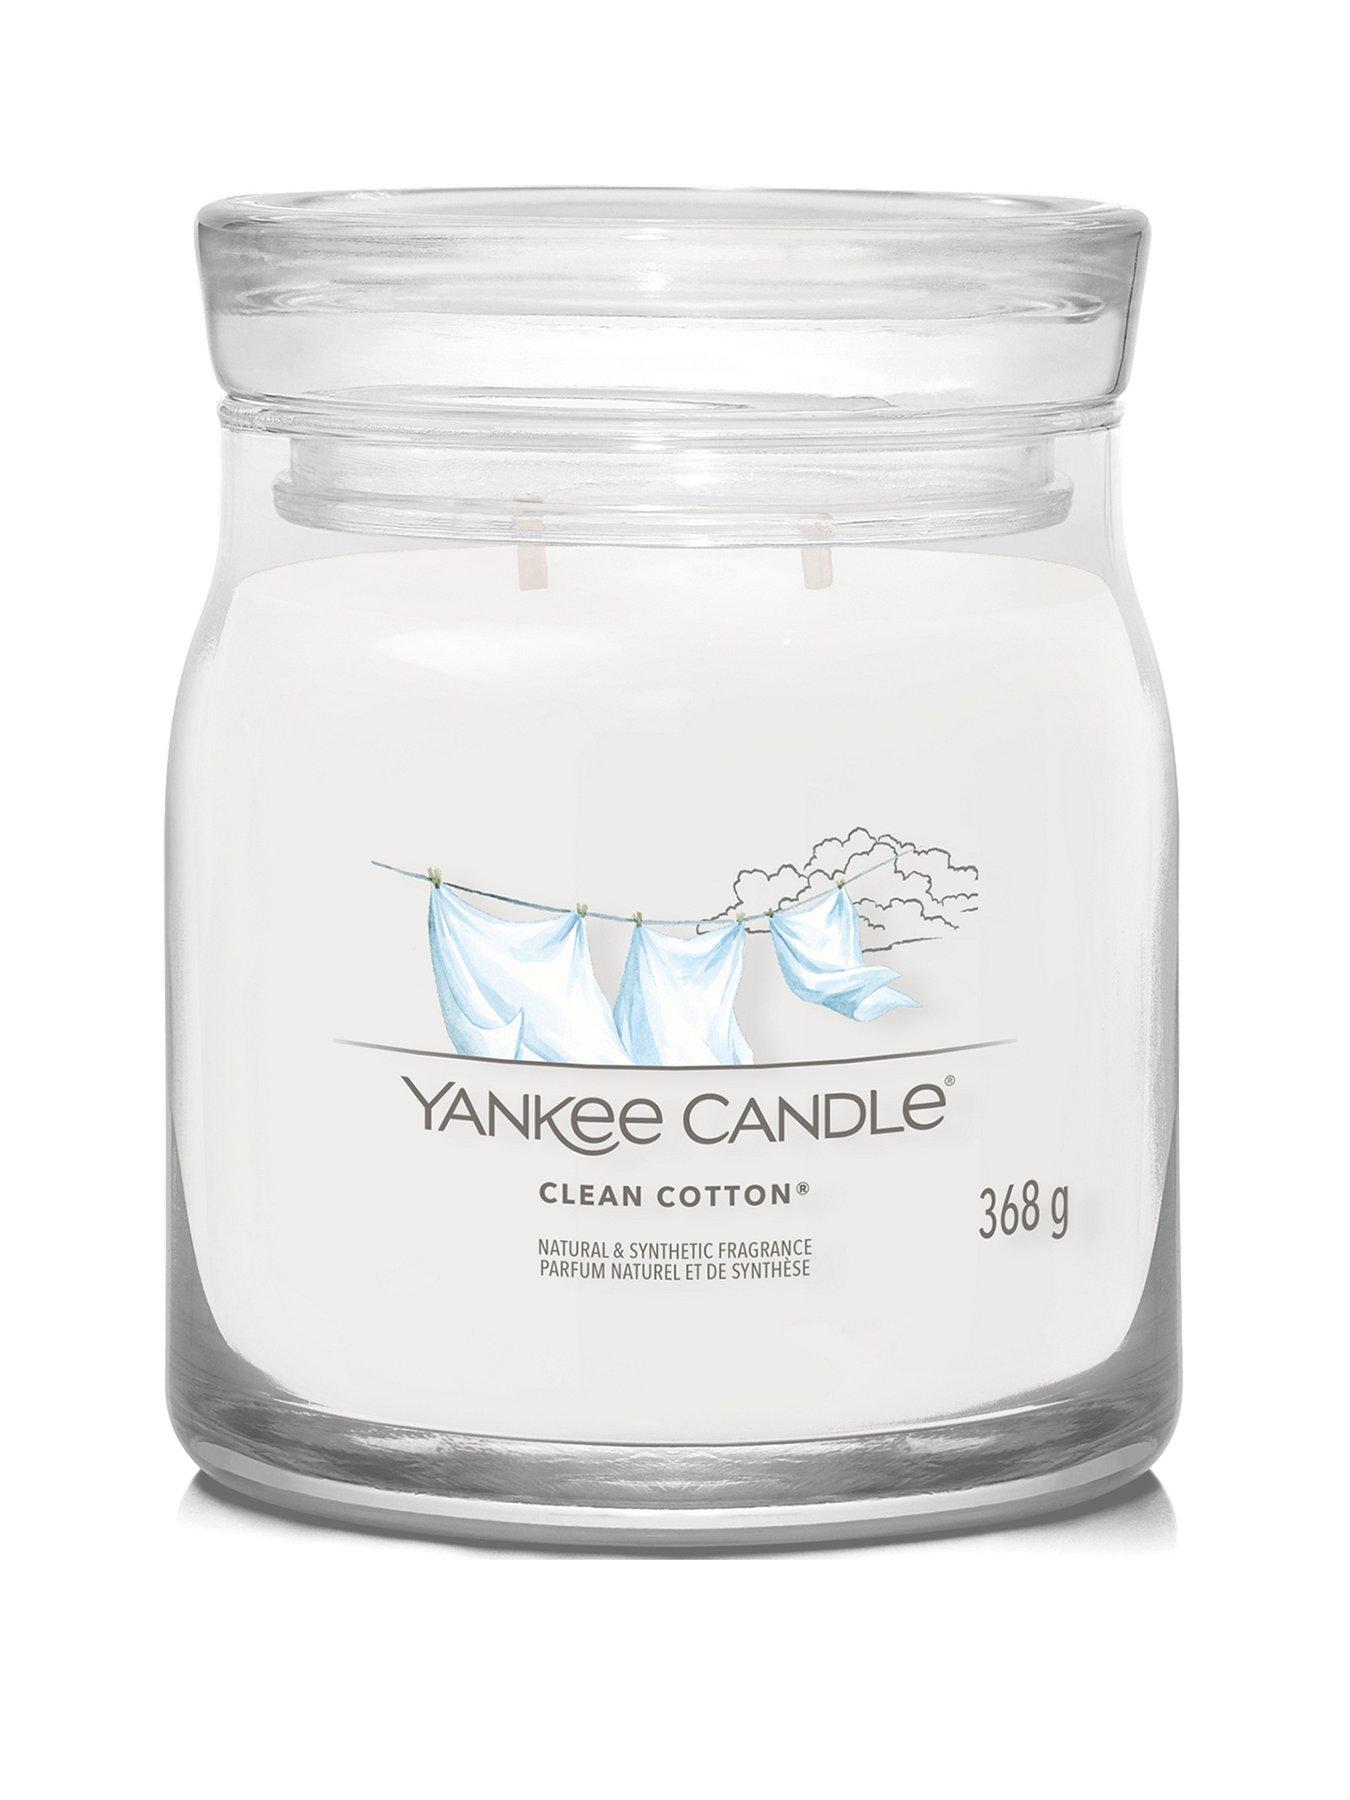 Yankee Candle Signature Medium Jar Candle – Clean Cotton